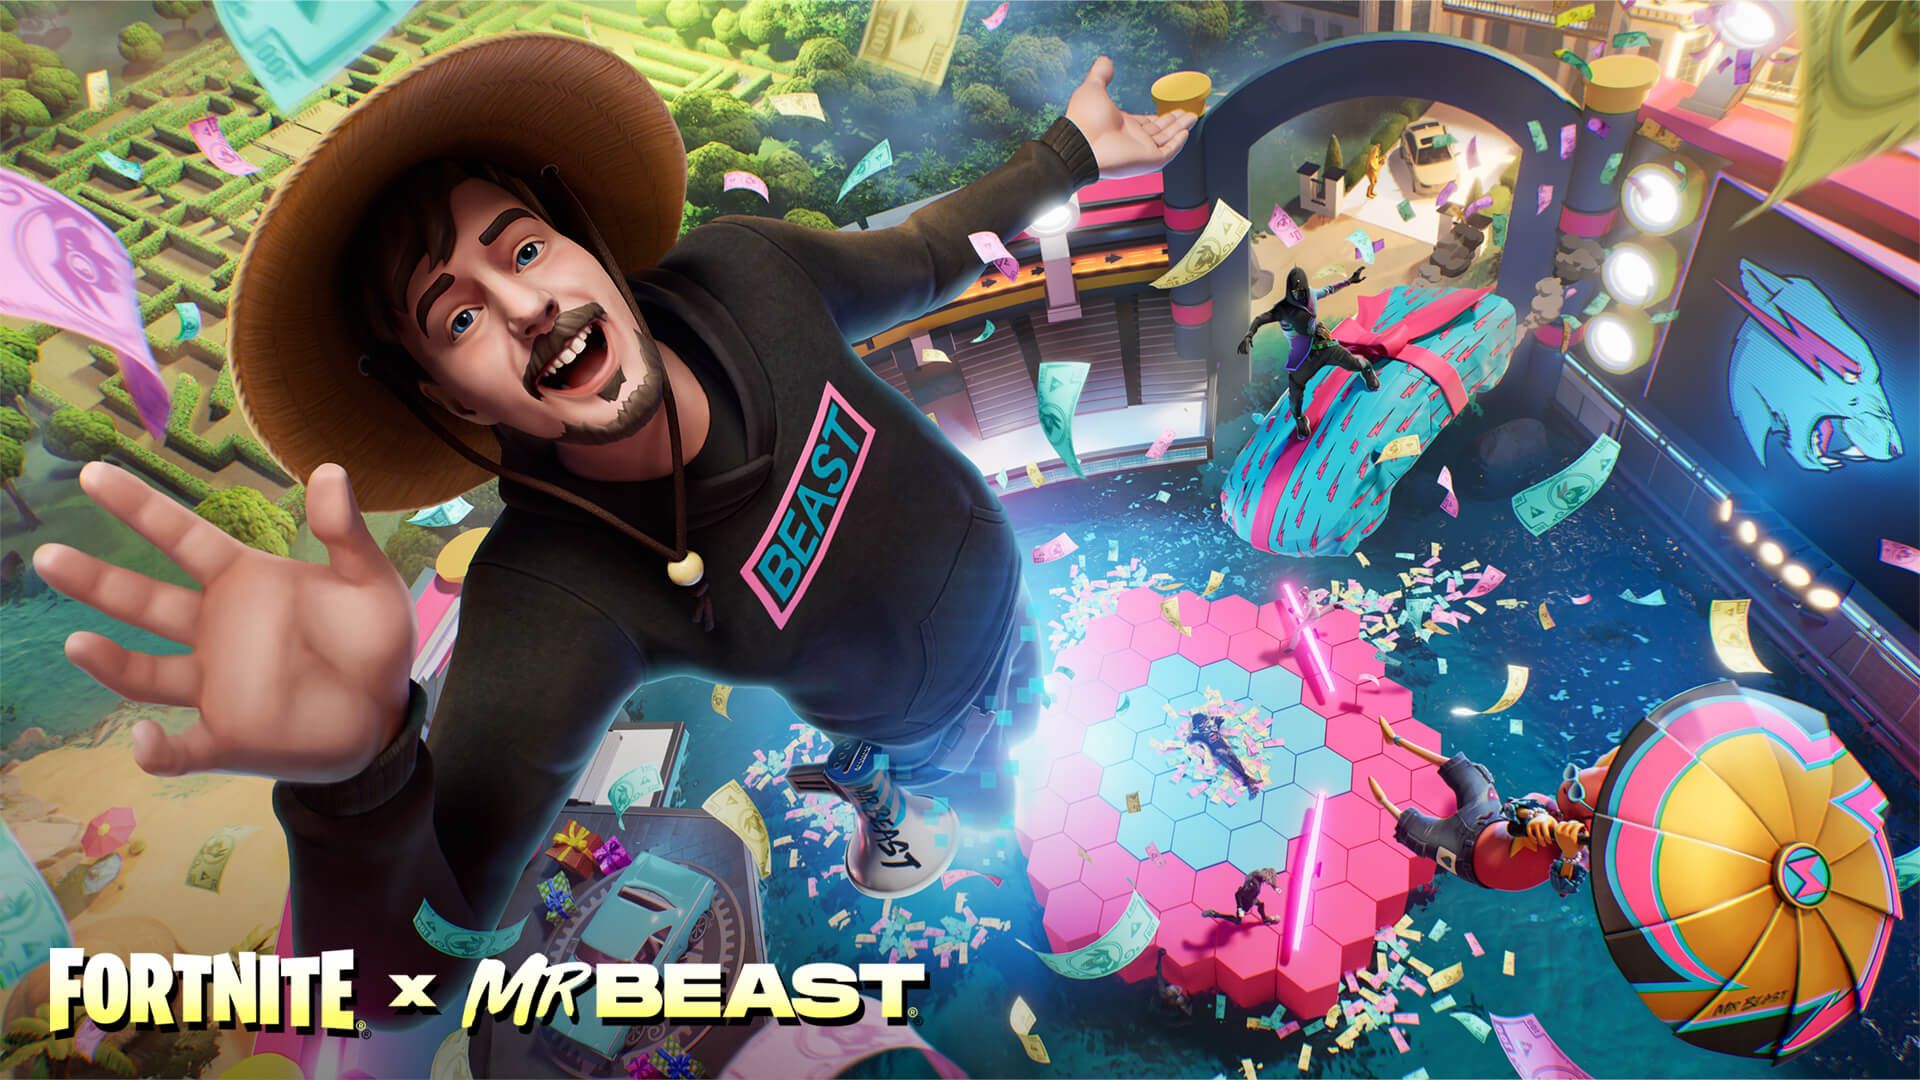 Mr Beast Fortnite tournament